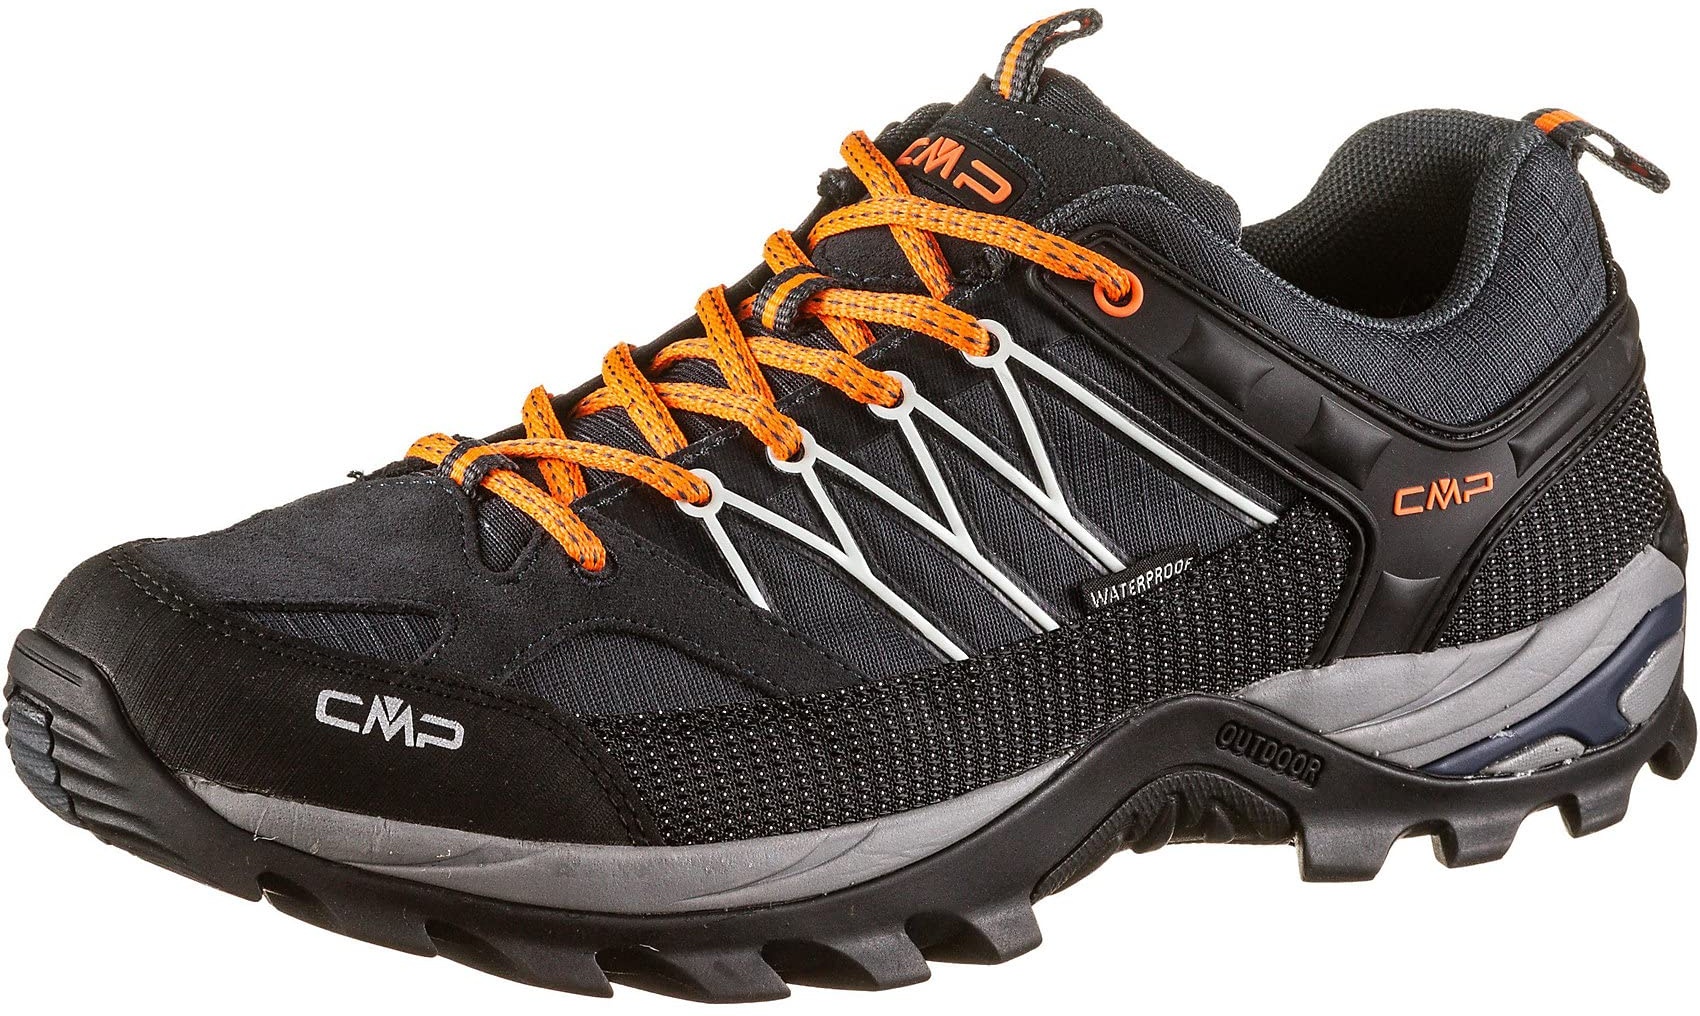 CMP Herren Rigel Low Shoe WP Trekking Shoes, Antracite-Flash ORANGE, 44 EU